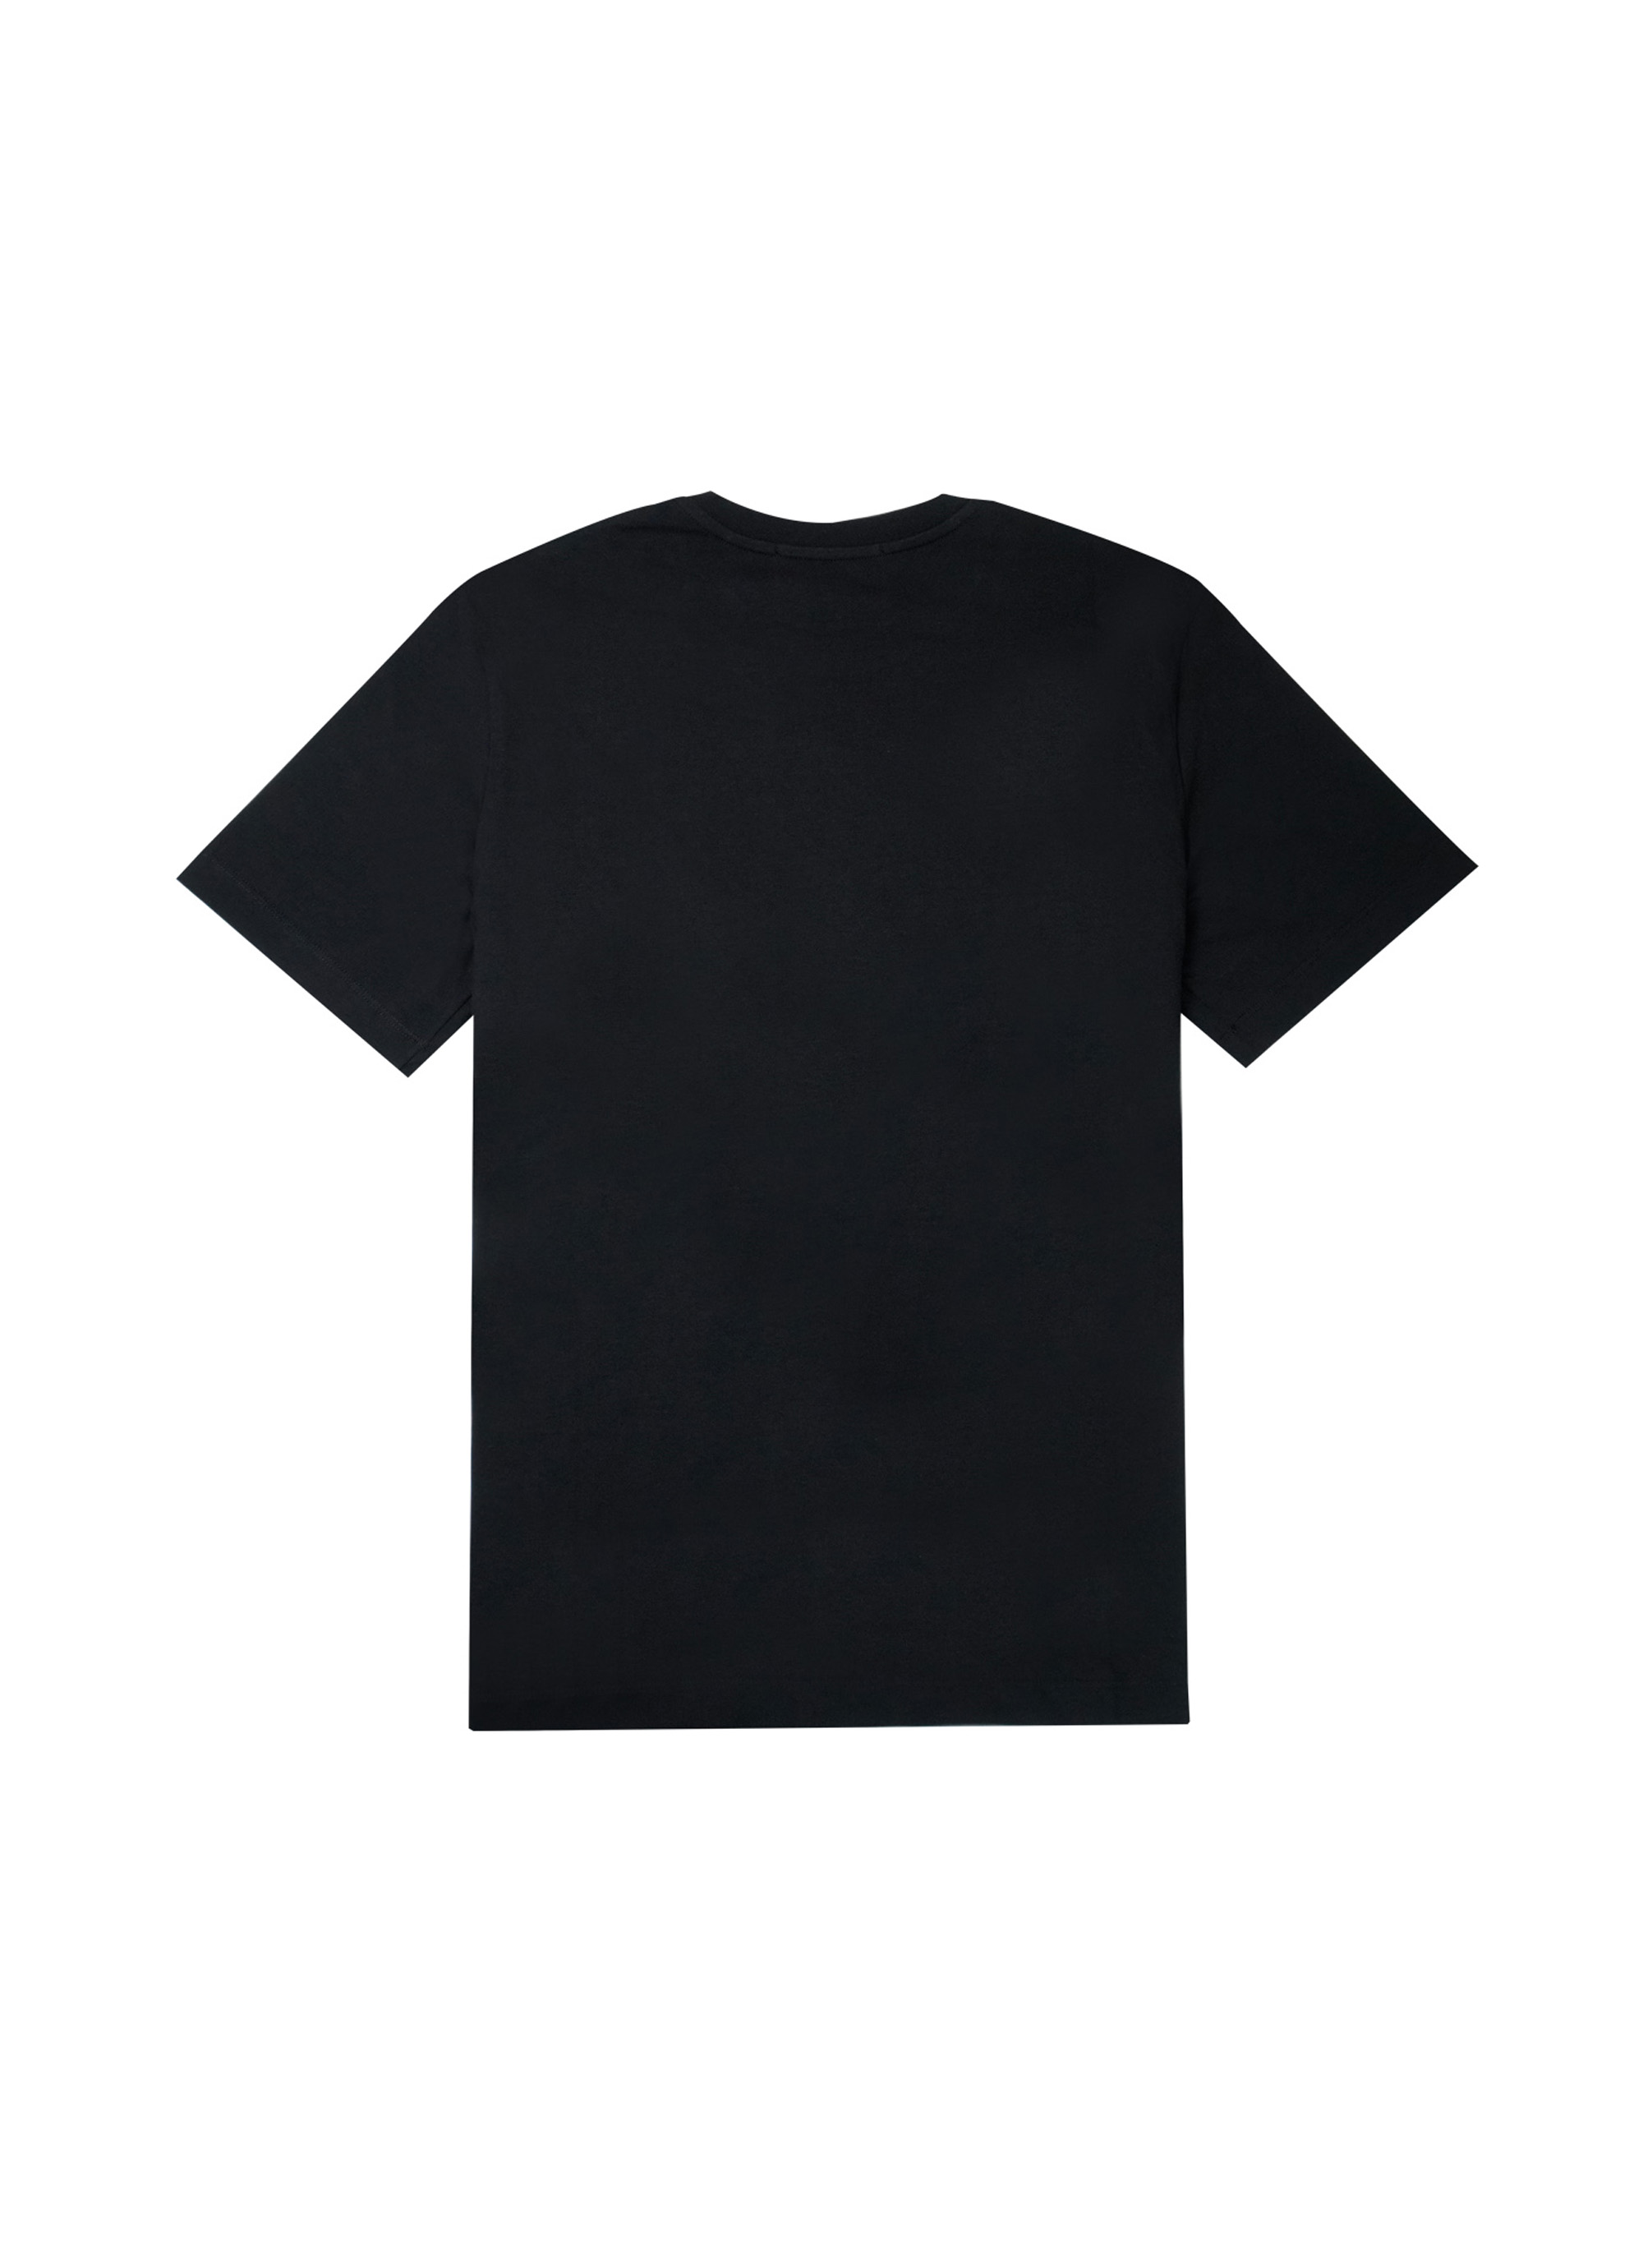 【NEW】ブラッシュストローク ロゴTシャツ 詳細画像 ブラック 2